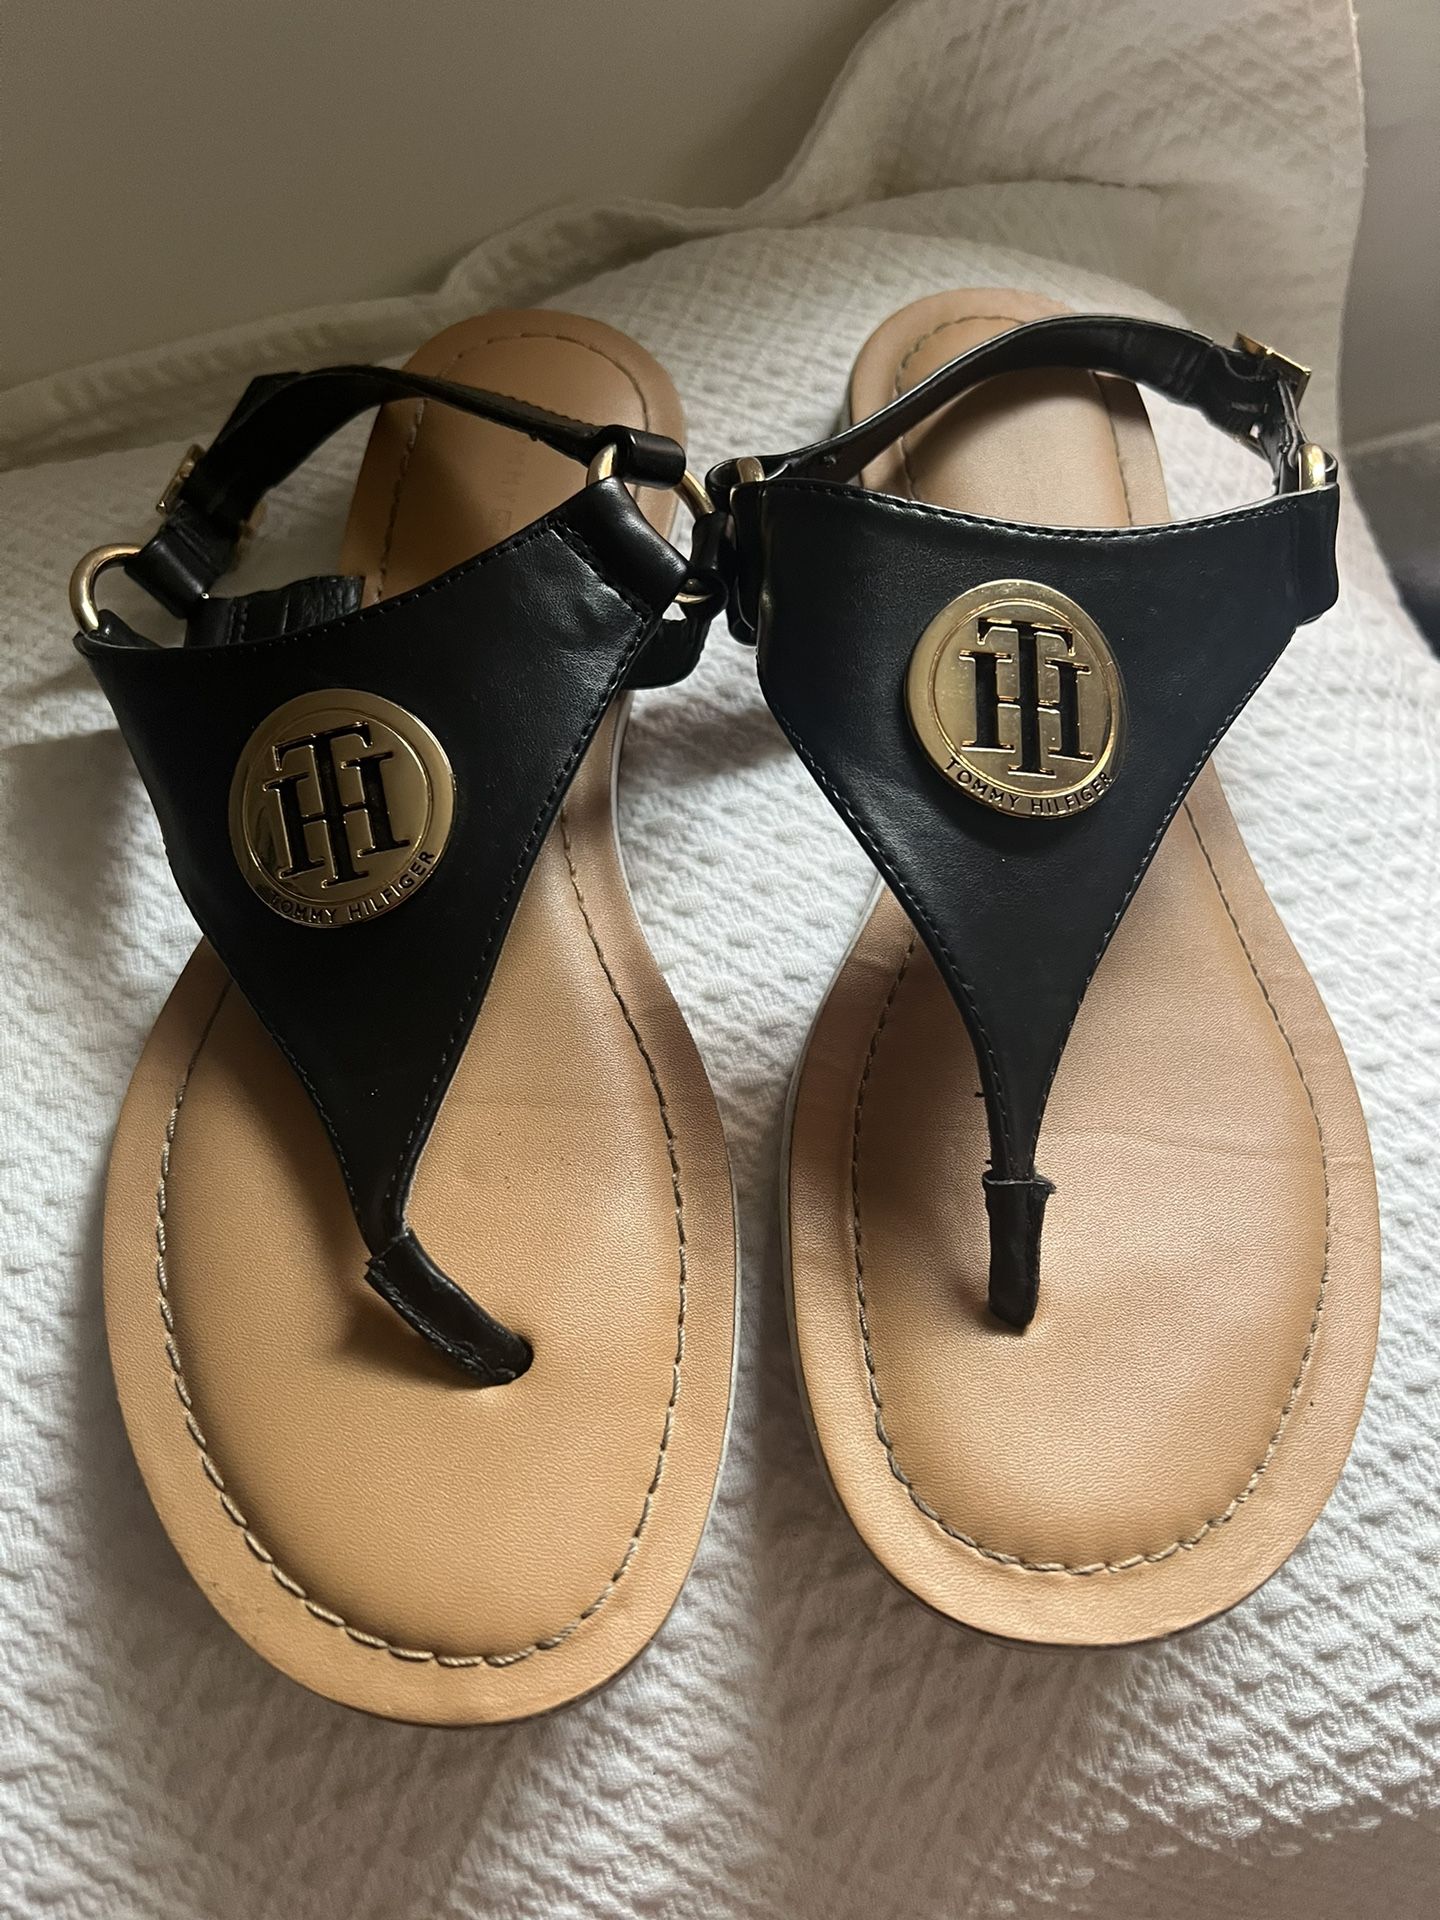 Women Sandals Tommy Hilfiger Size 7.5 For $15